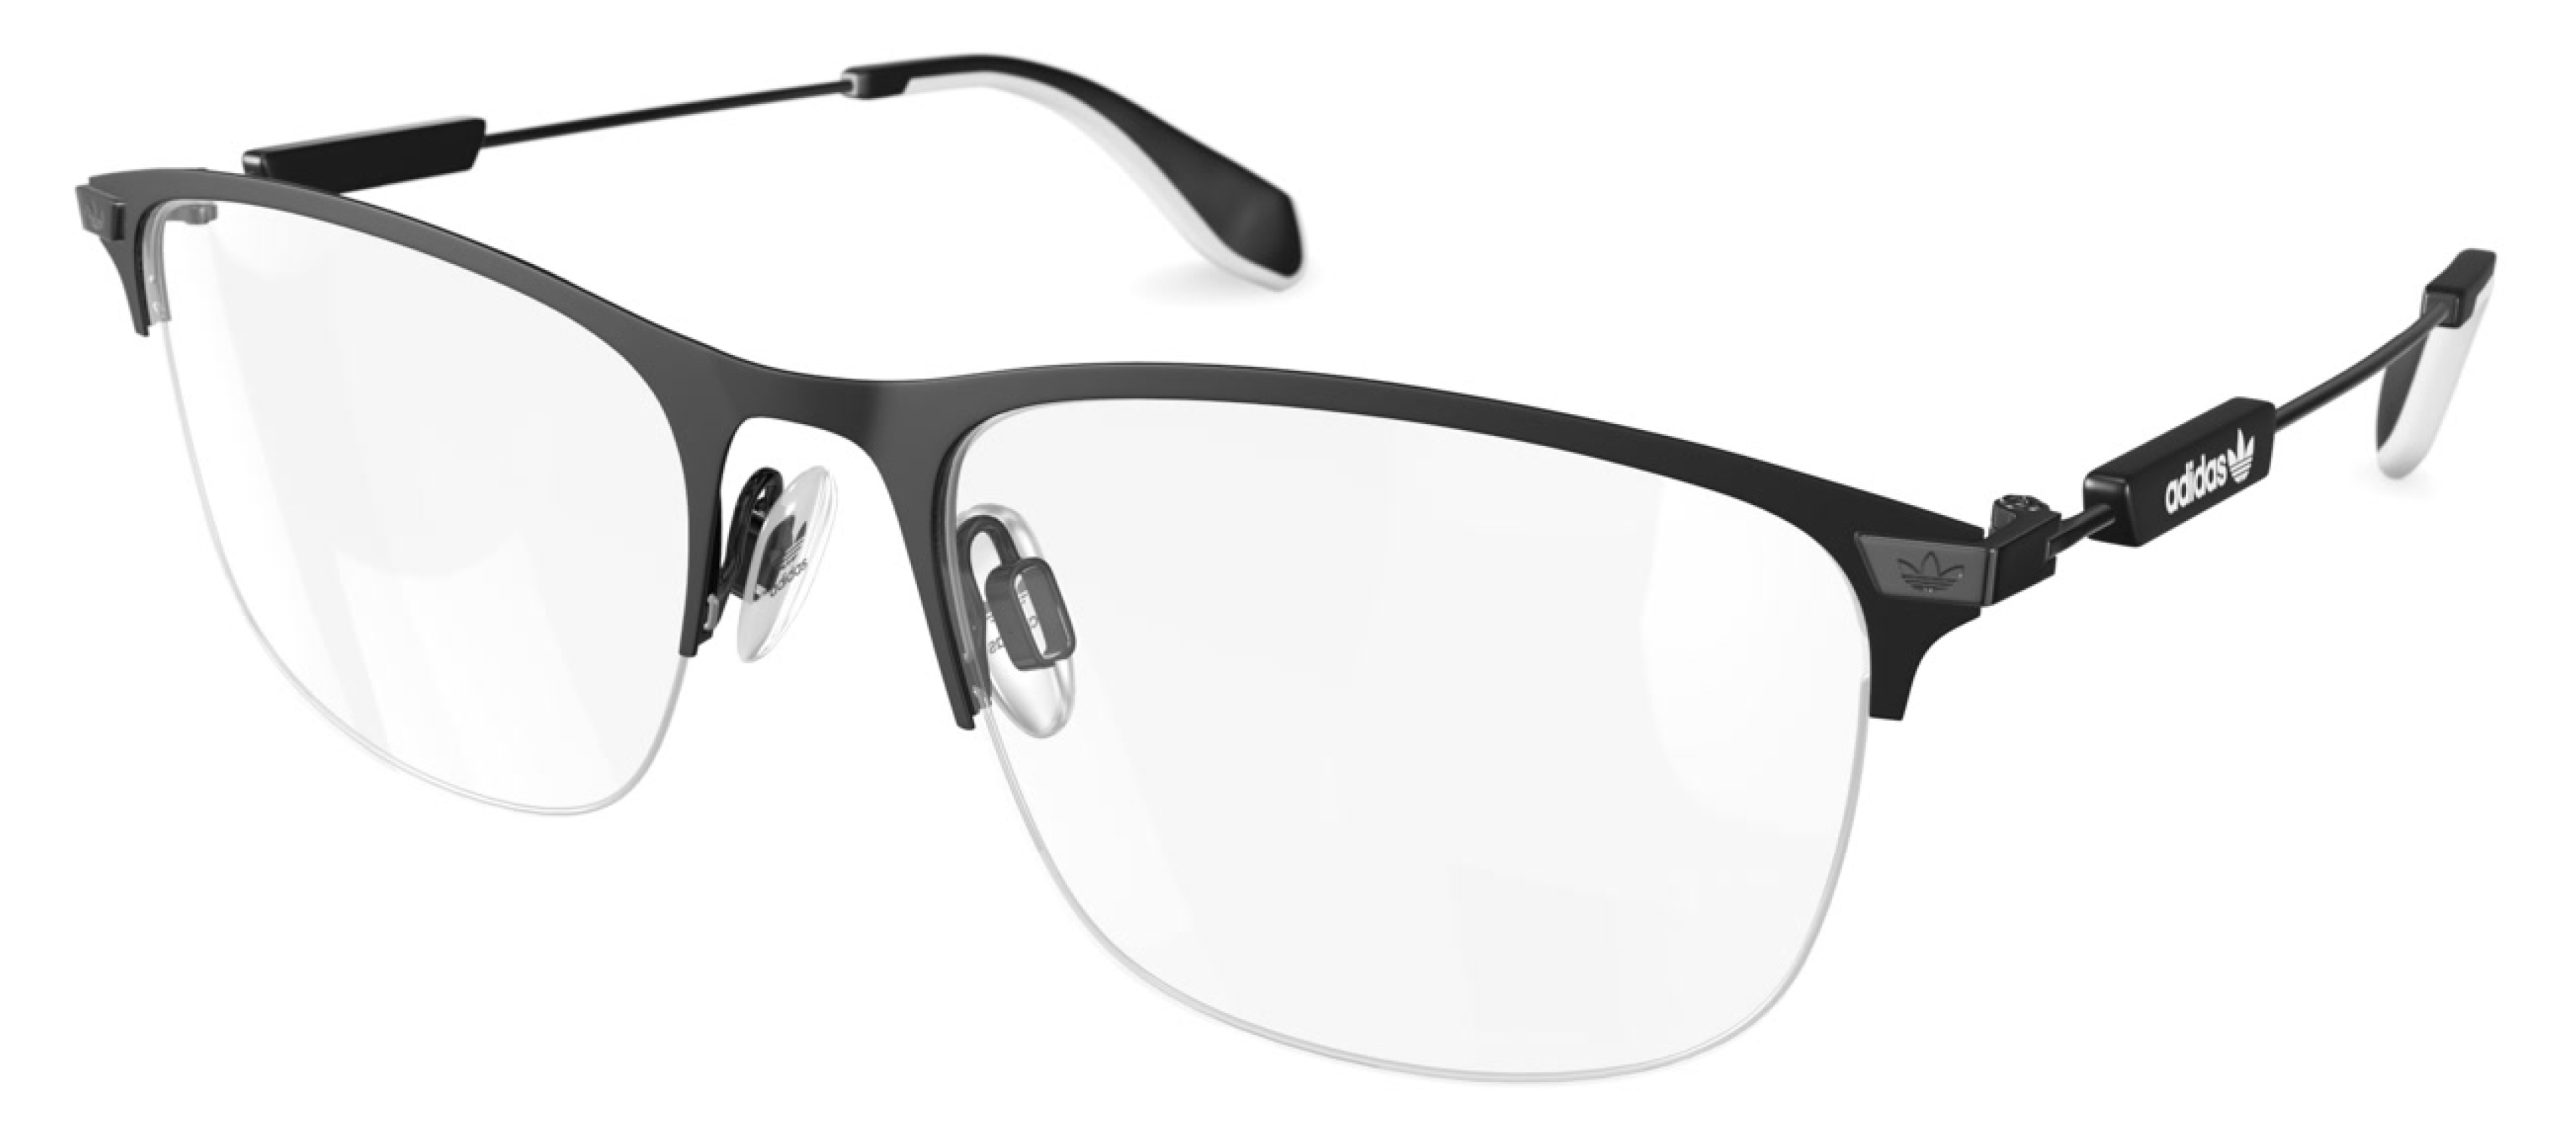 adidas Originals Eyewear #LoveGlasses